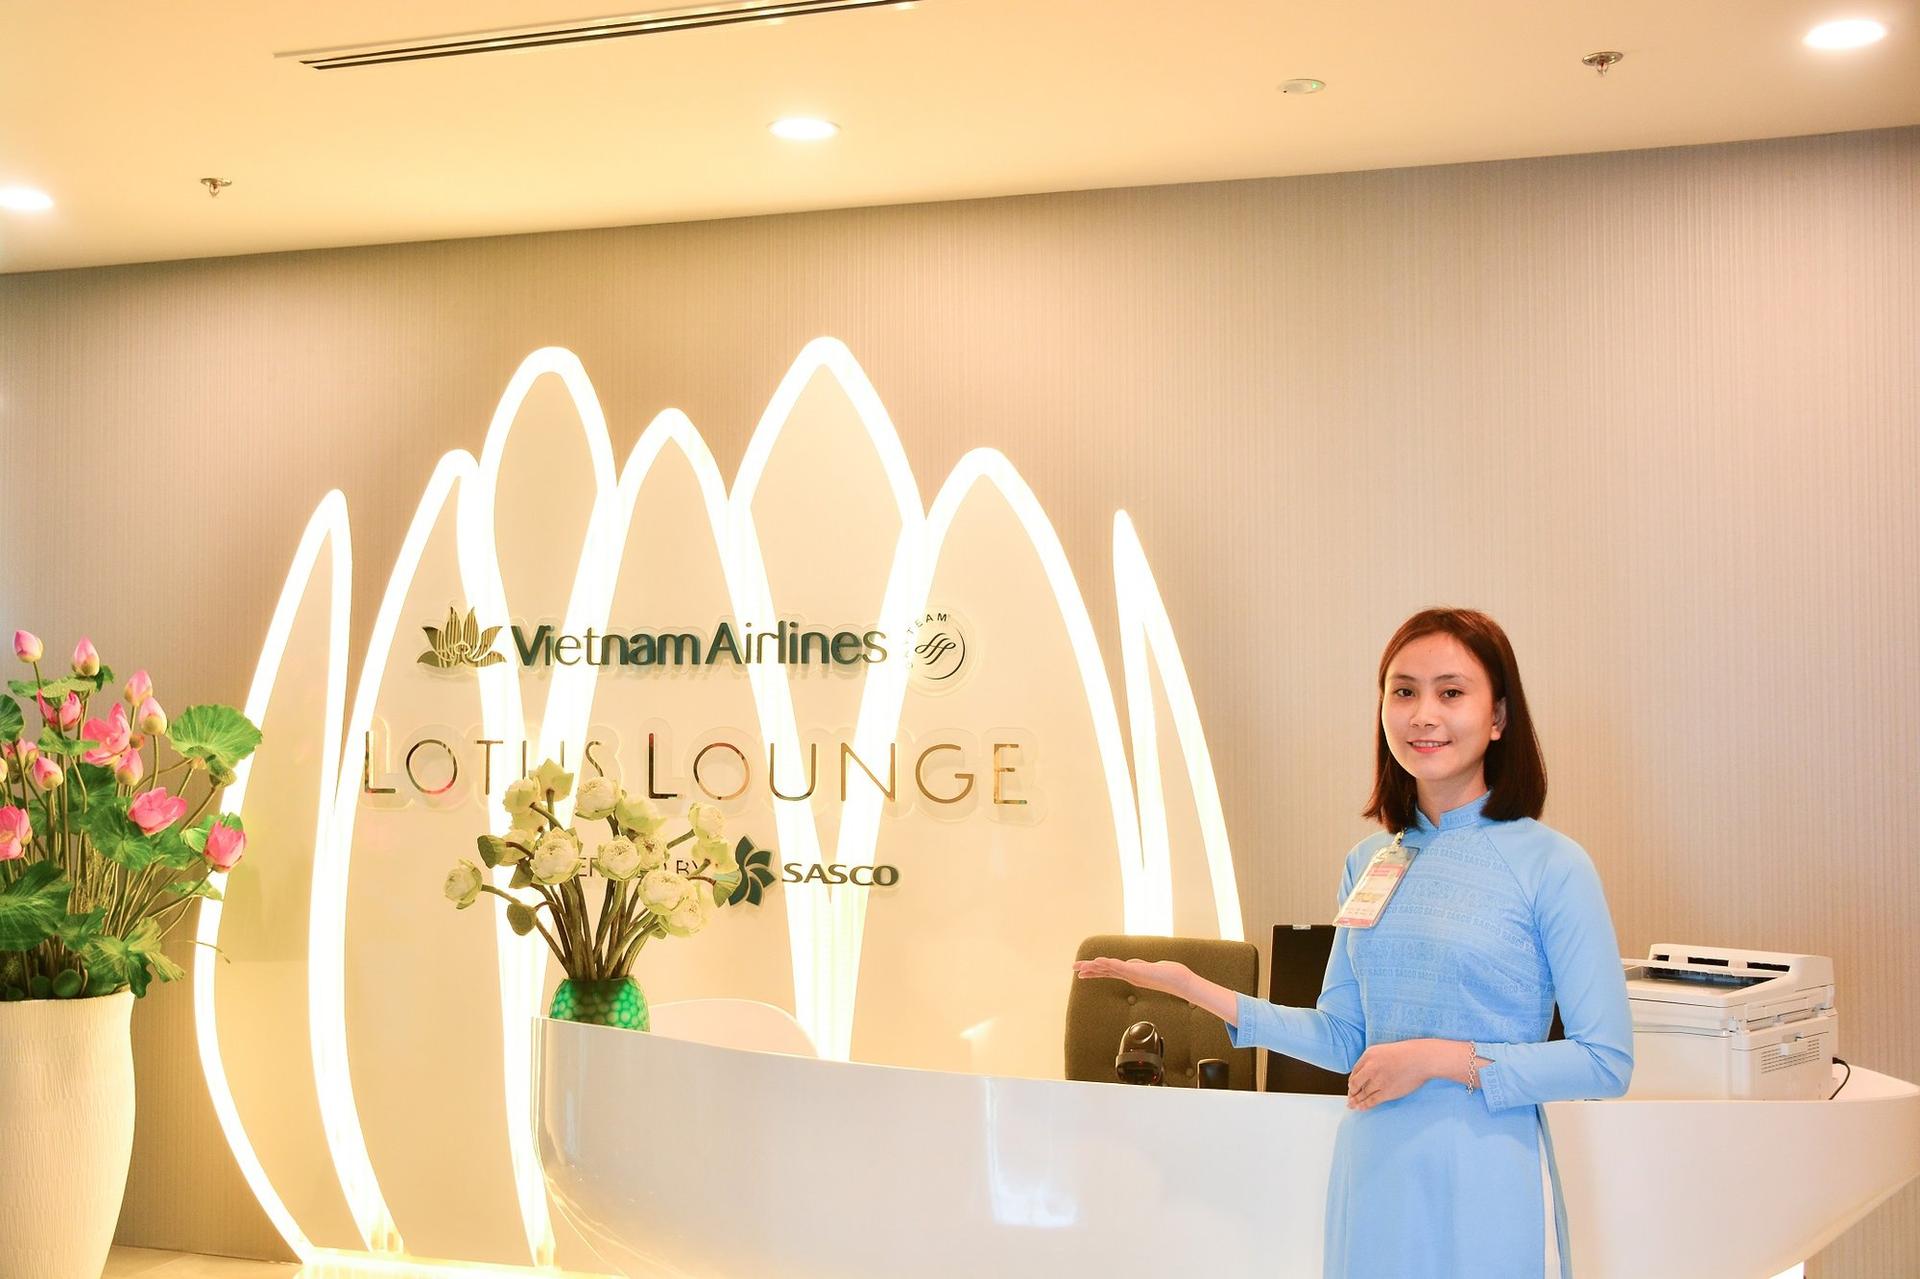 Vietnam Airlines Lotus Lounge image 2 of 12